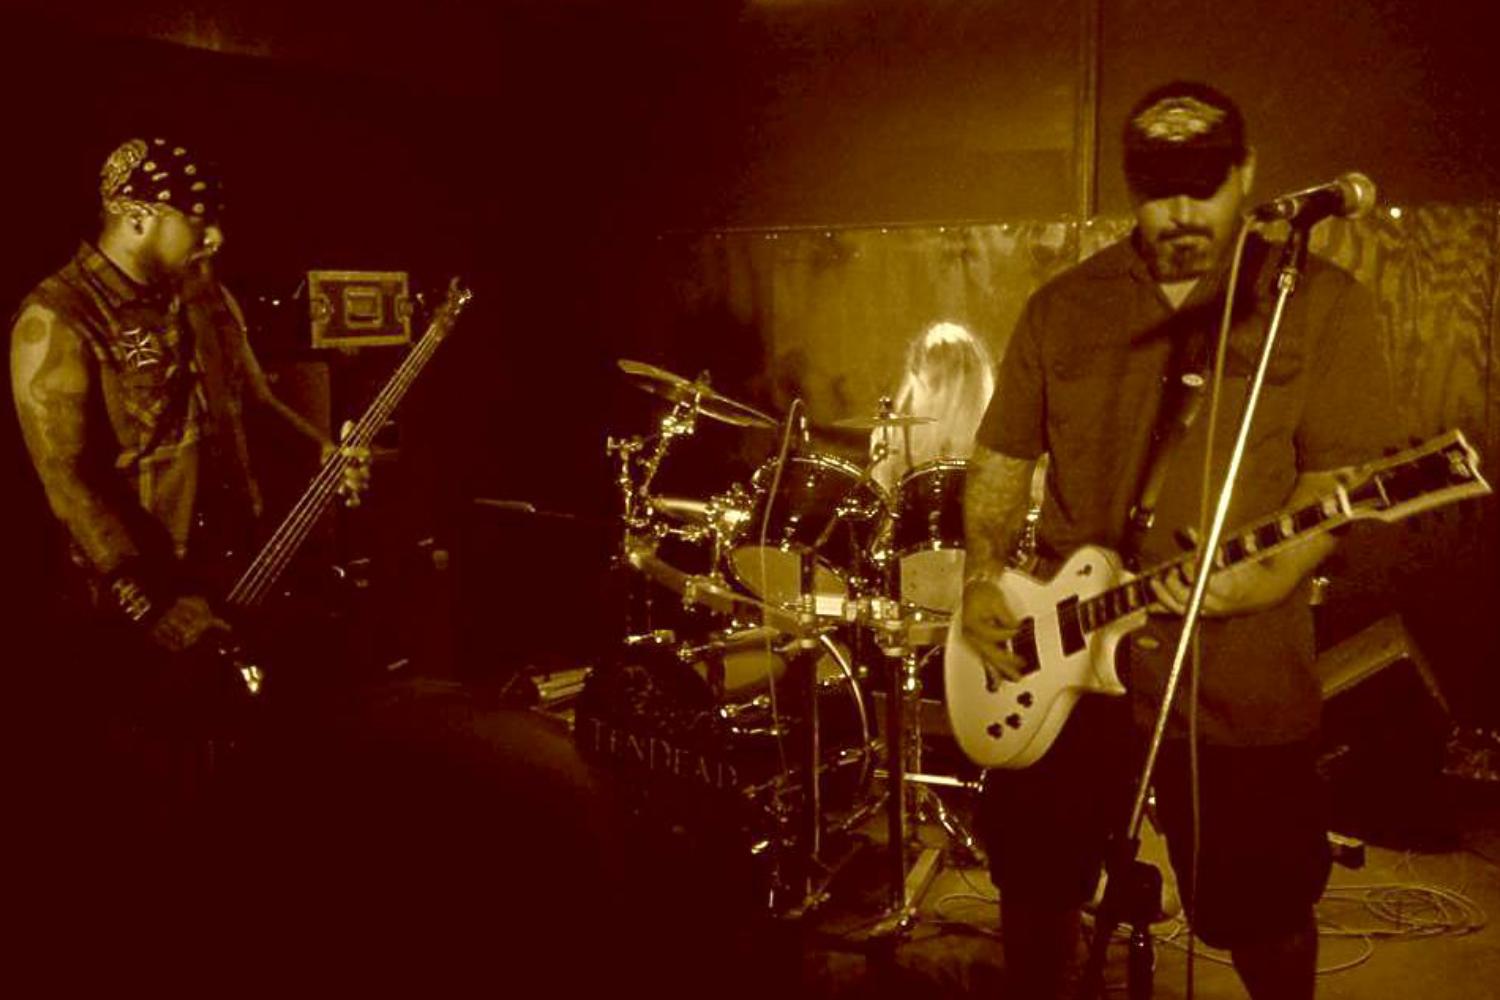 Live Music in Norfolk, Nebraska - The Blood of War, Helldorado, Deadechoes & TenDead performing live at The Phoenix Room located inside The Depot in Norfolk, NE